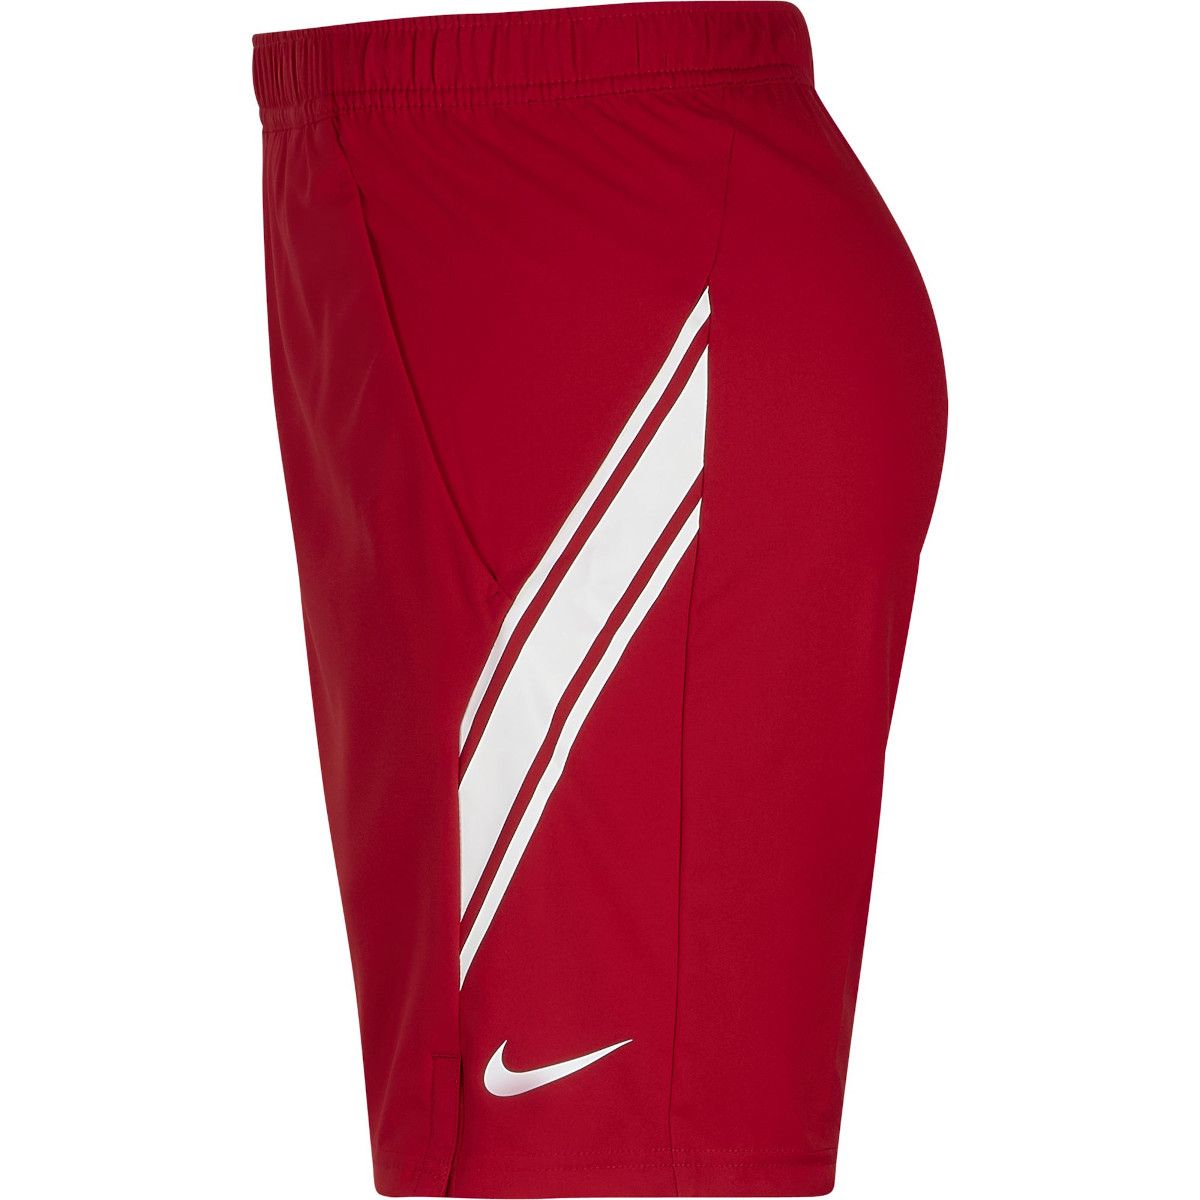 NikeCourt Dry 9-inch Men's Tennis Shorts 939265-688